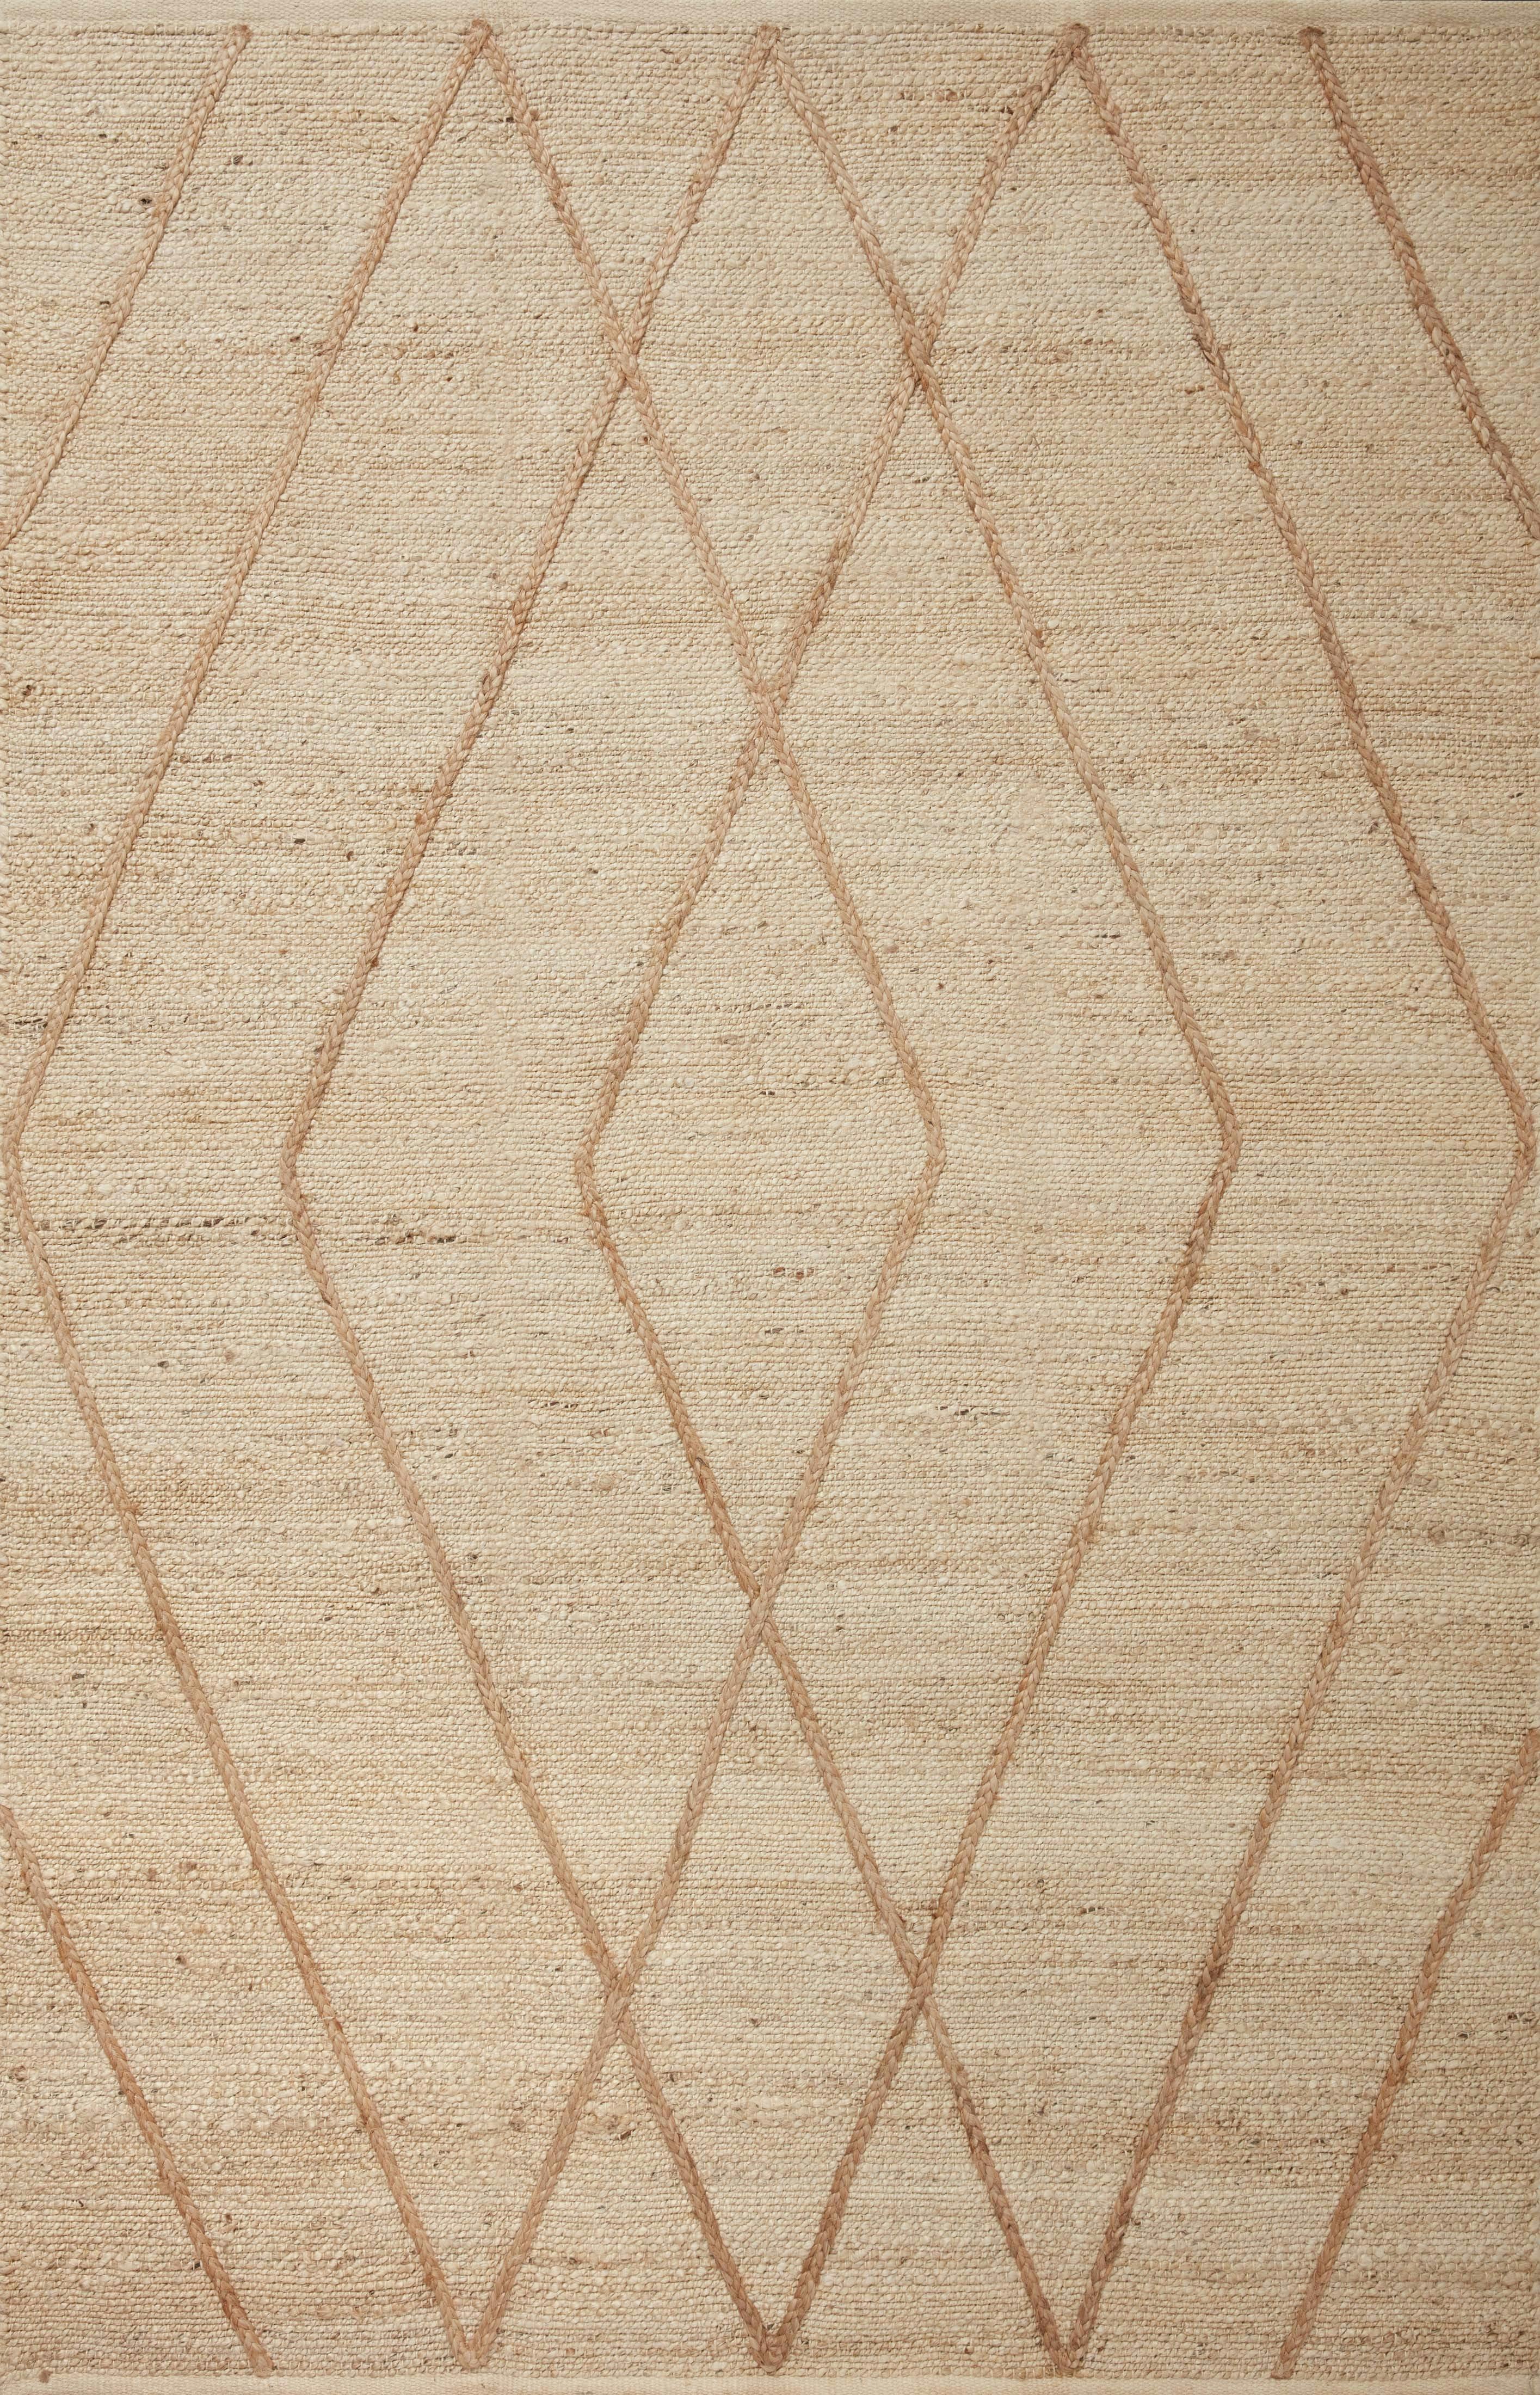 Ivory Geometric Braided Handwoven Jute Area Rug 5' x 7'